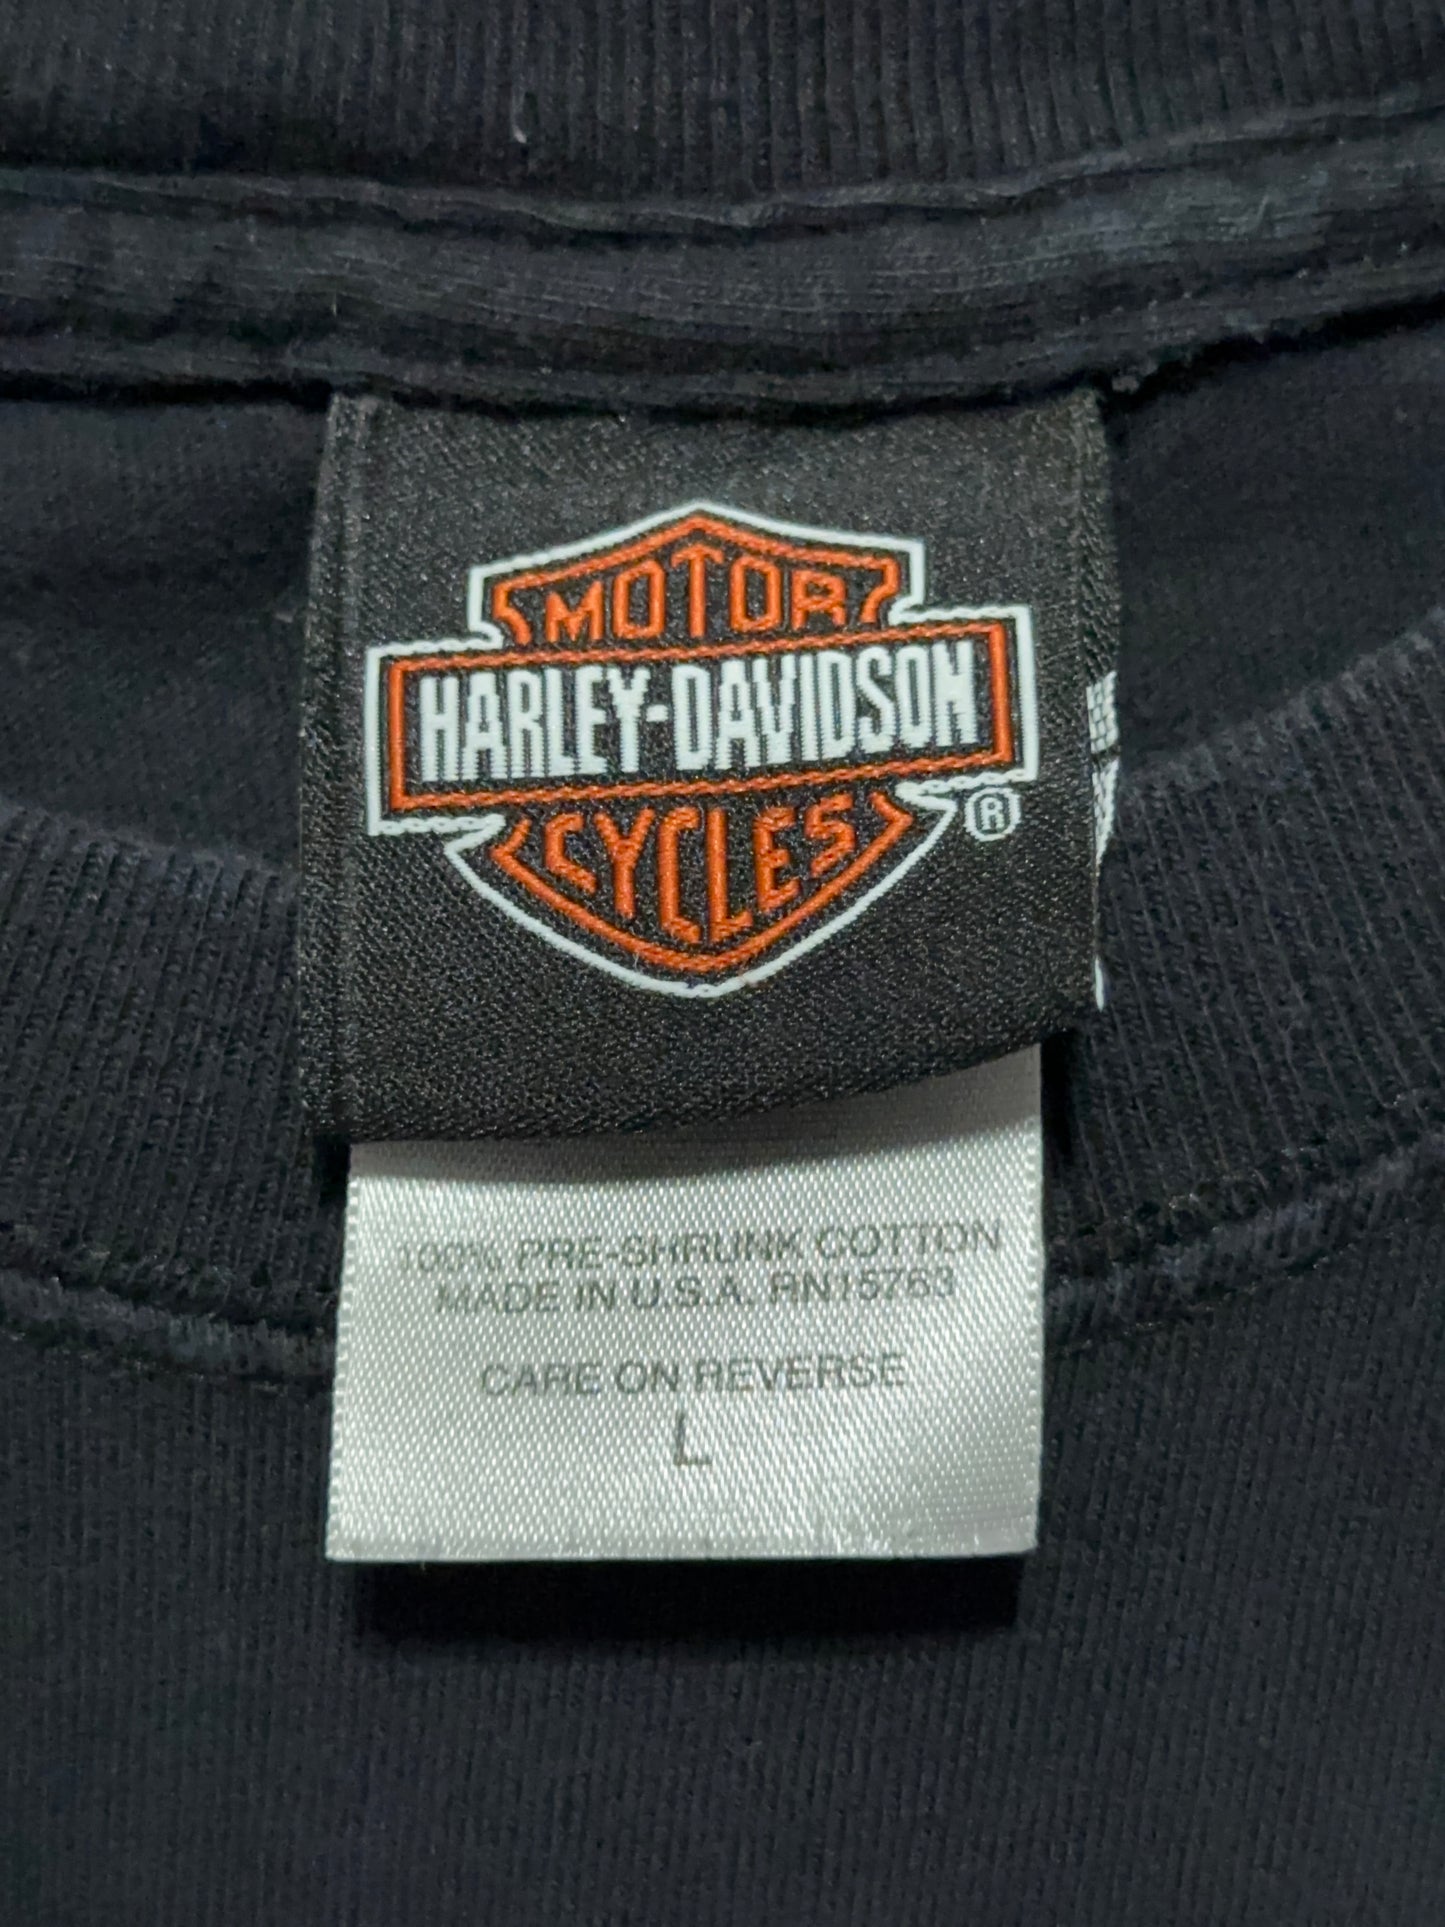 Harley Davidson Texas Flames Eagle Long Sleeve Tee Large